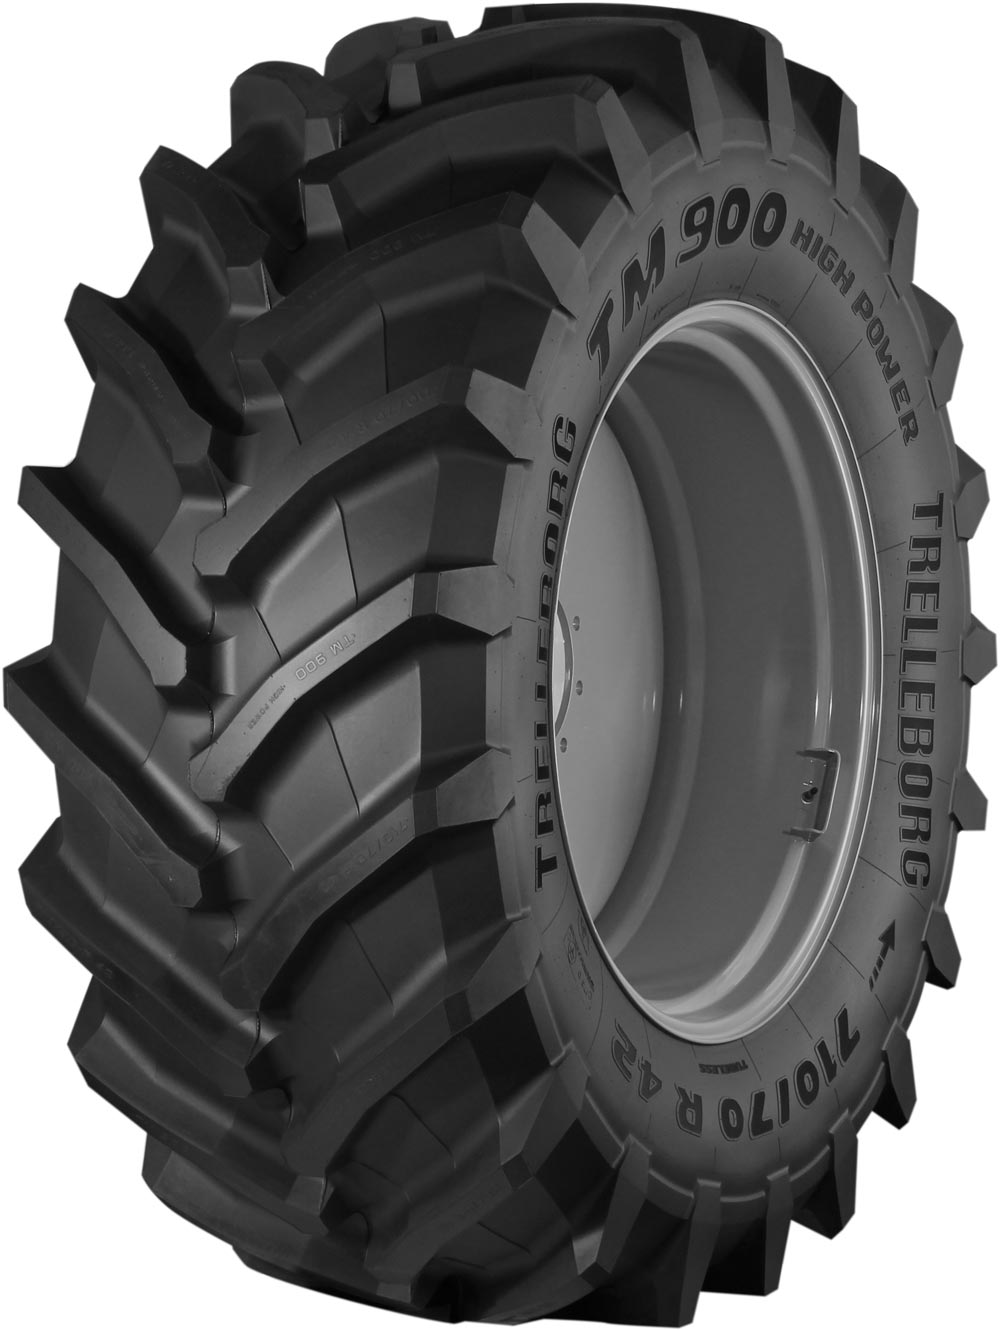 product_type-industrial_tires Trelleborg TM 900 HP TL 710/75 R42 175D